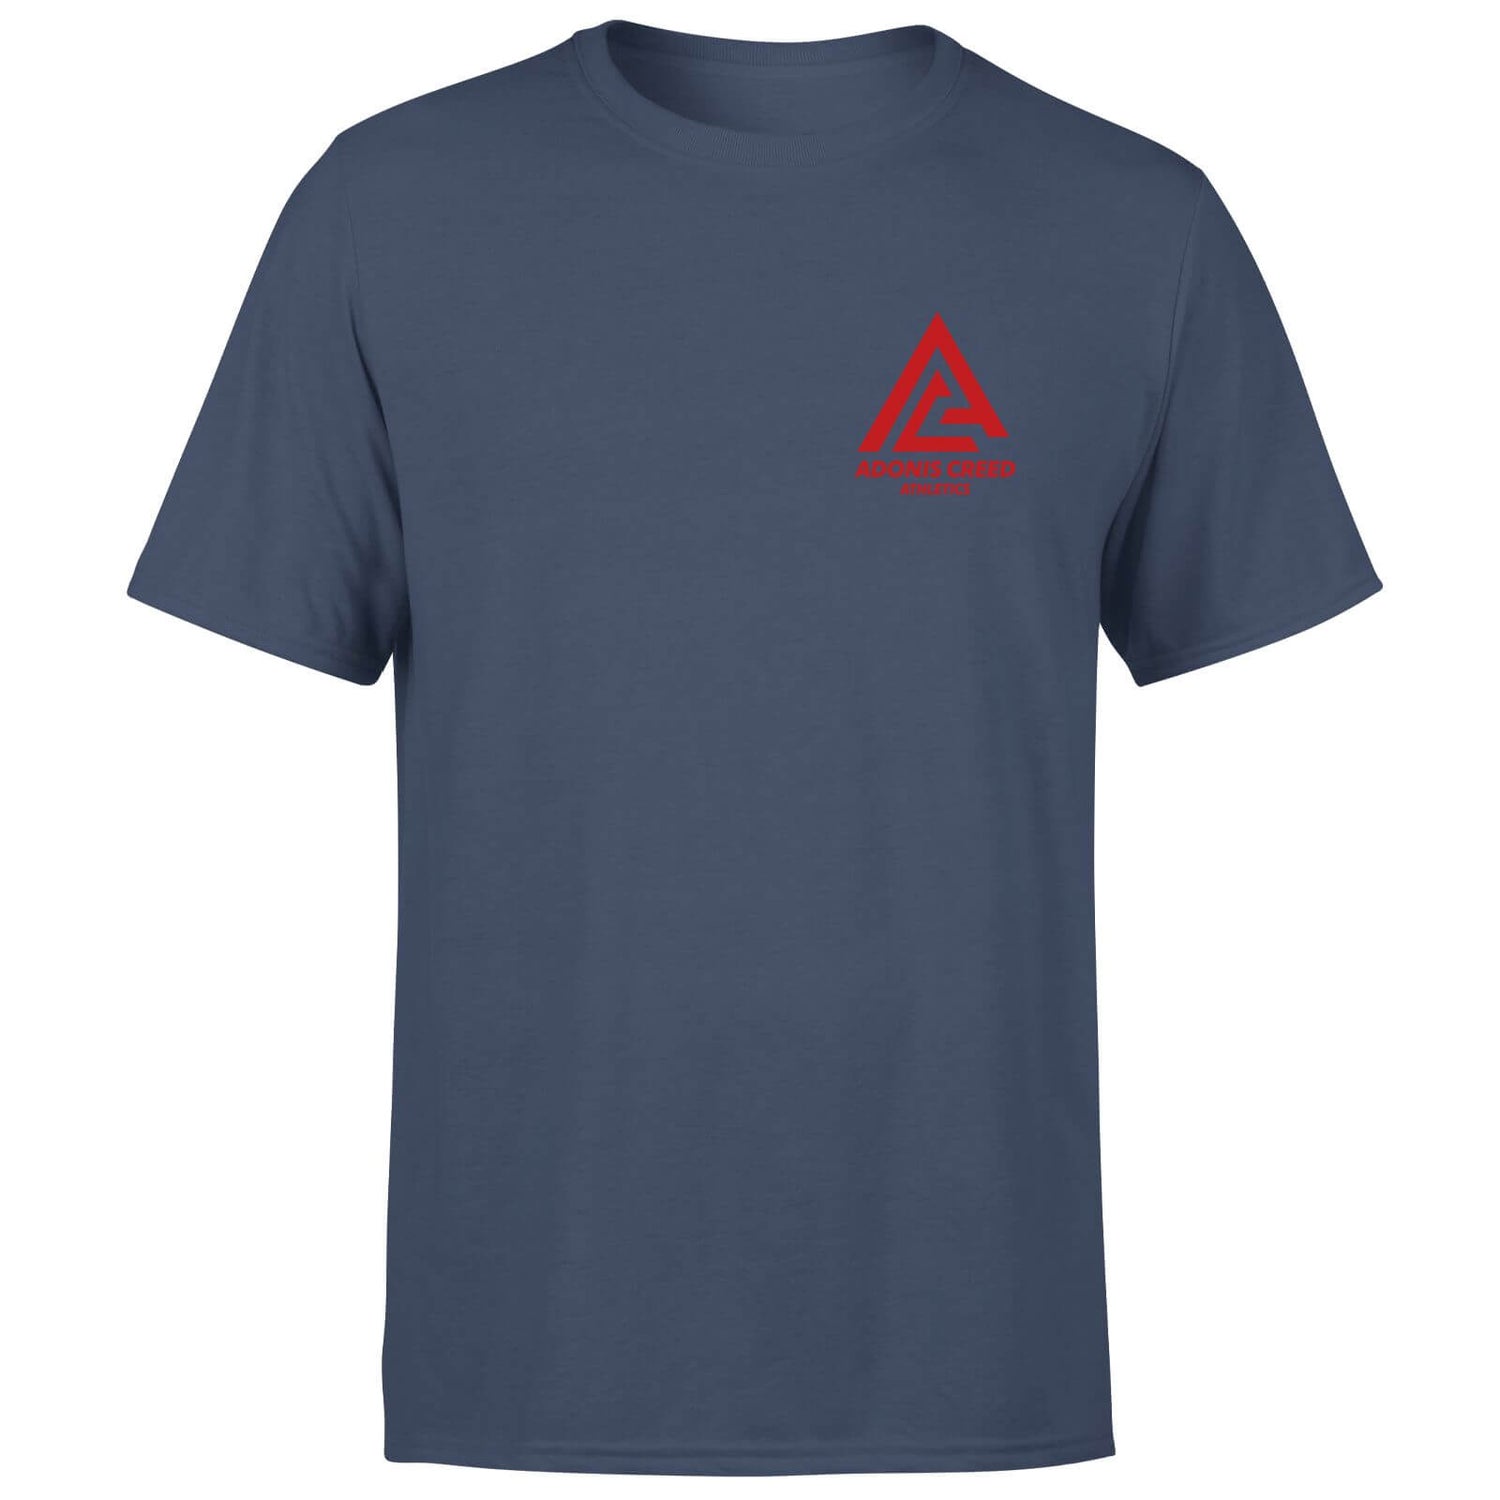 Creed Adonis Creed Athletics Logo Men's T-Shirt - Navy - XS